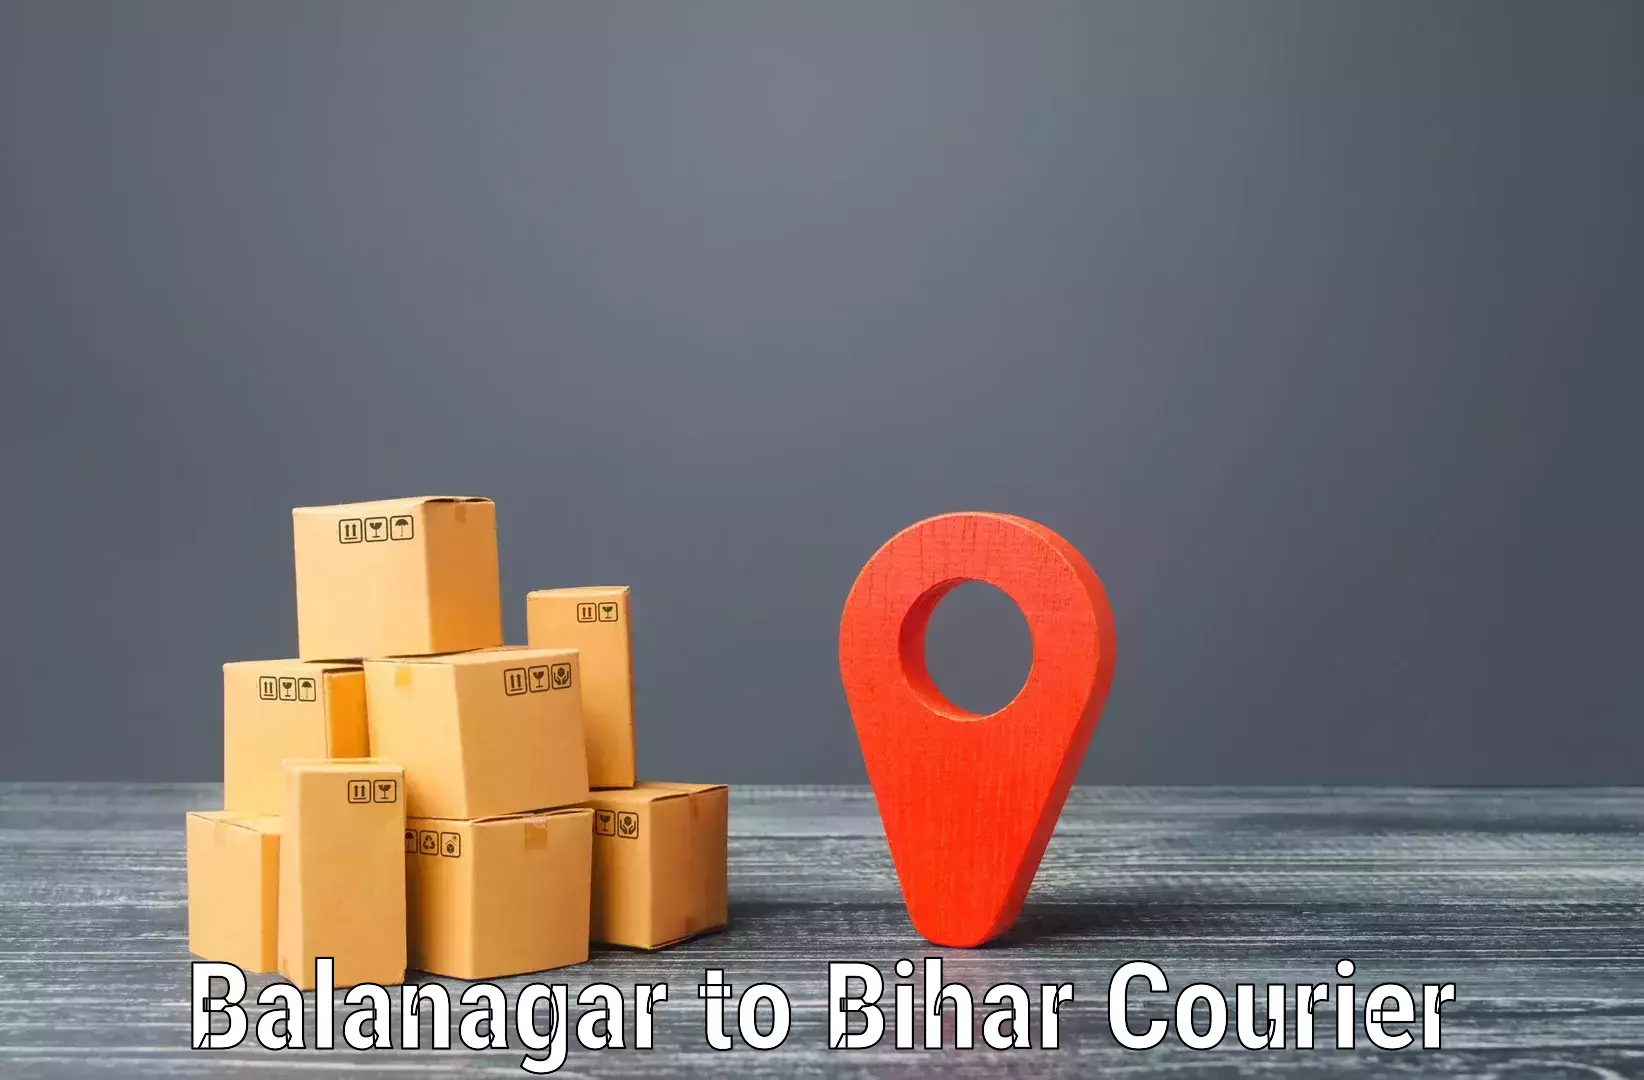 Courier tracking online Balanagar to Darbhanga